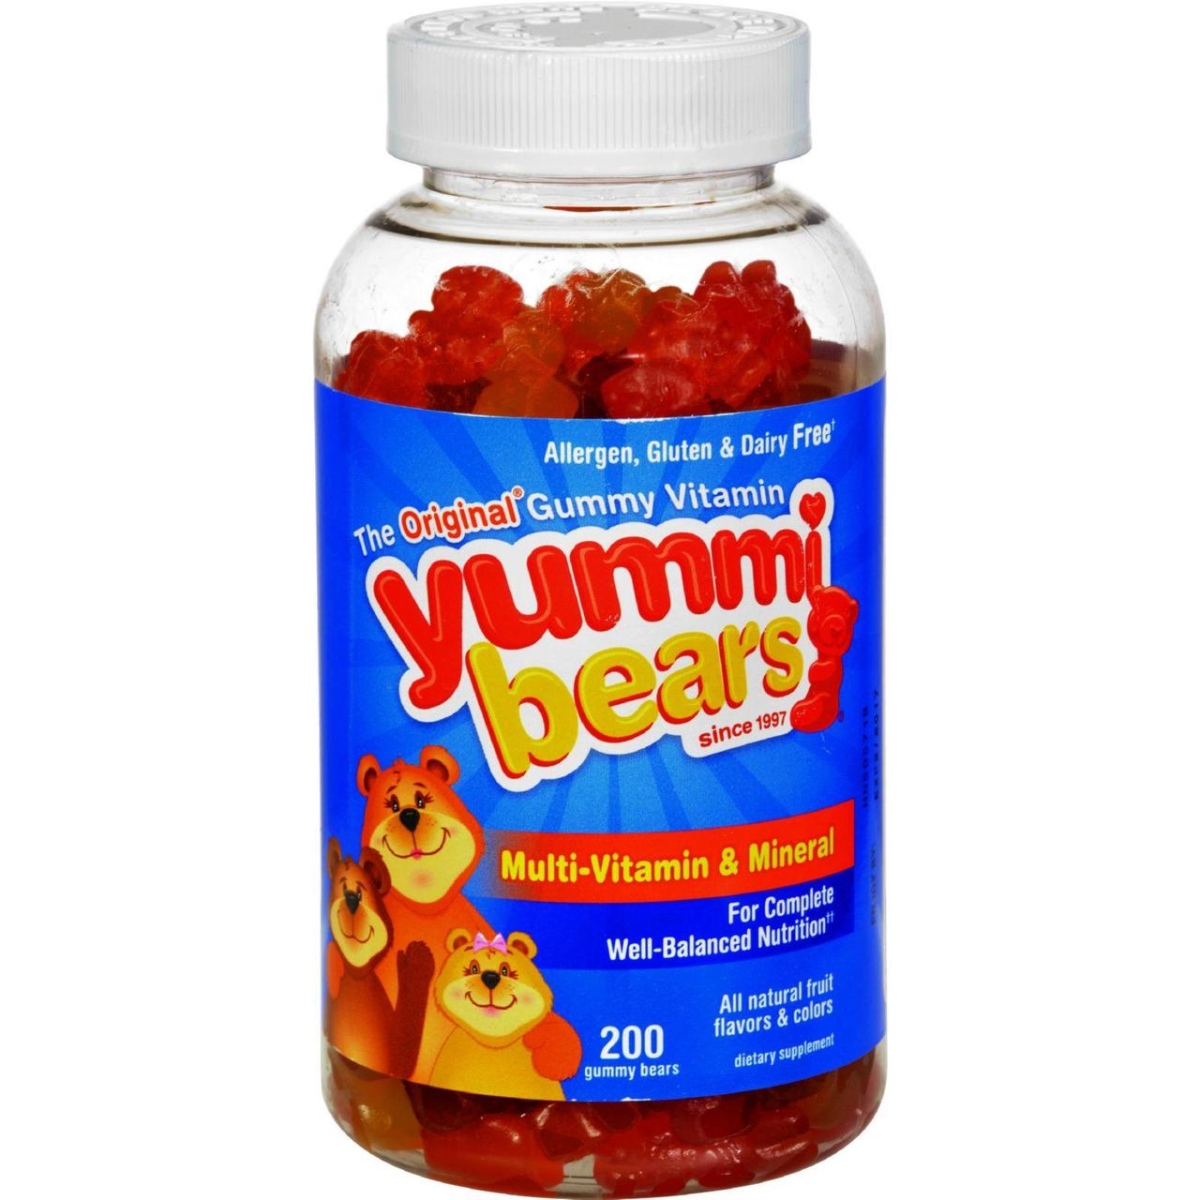 Hg0394239 Yummi Bears Gummy Vitamins For Children - 200 Gummies